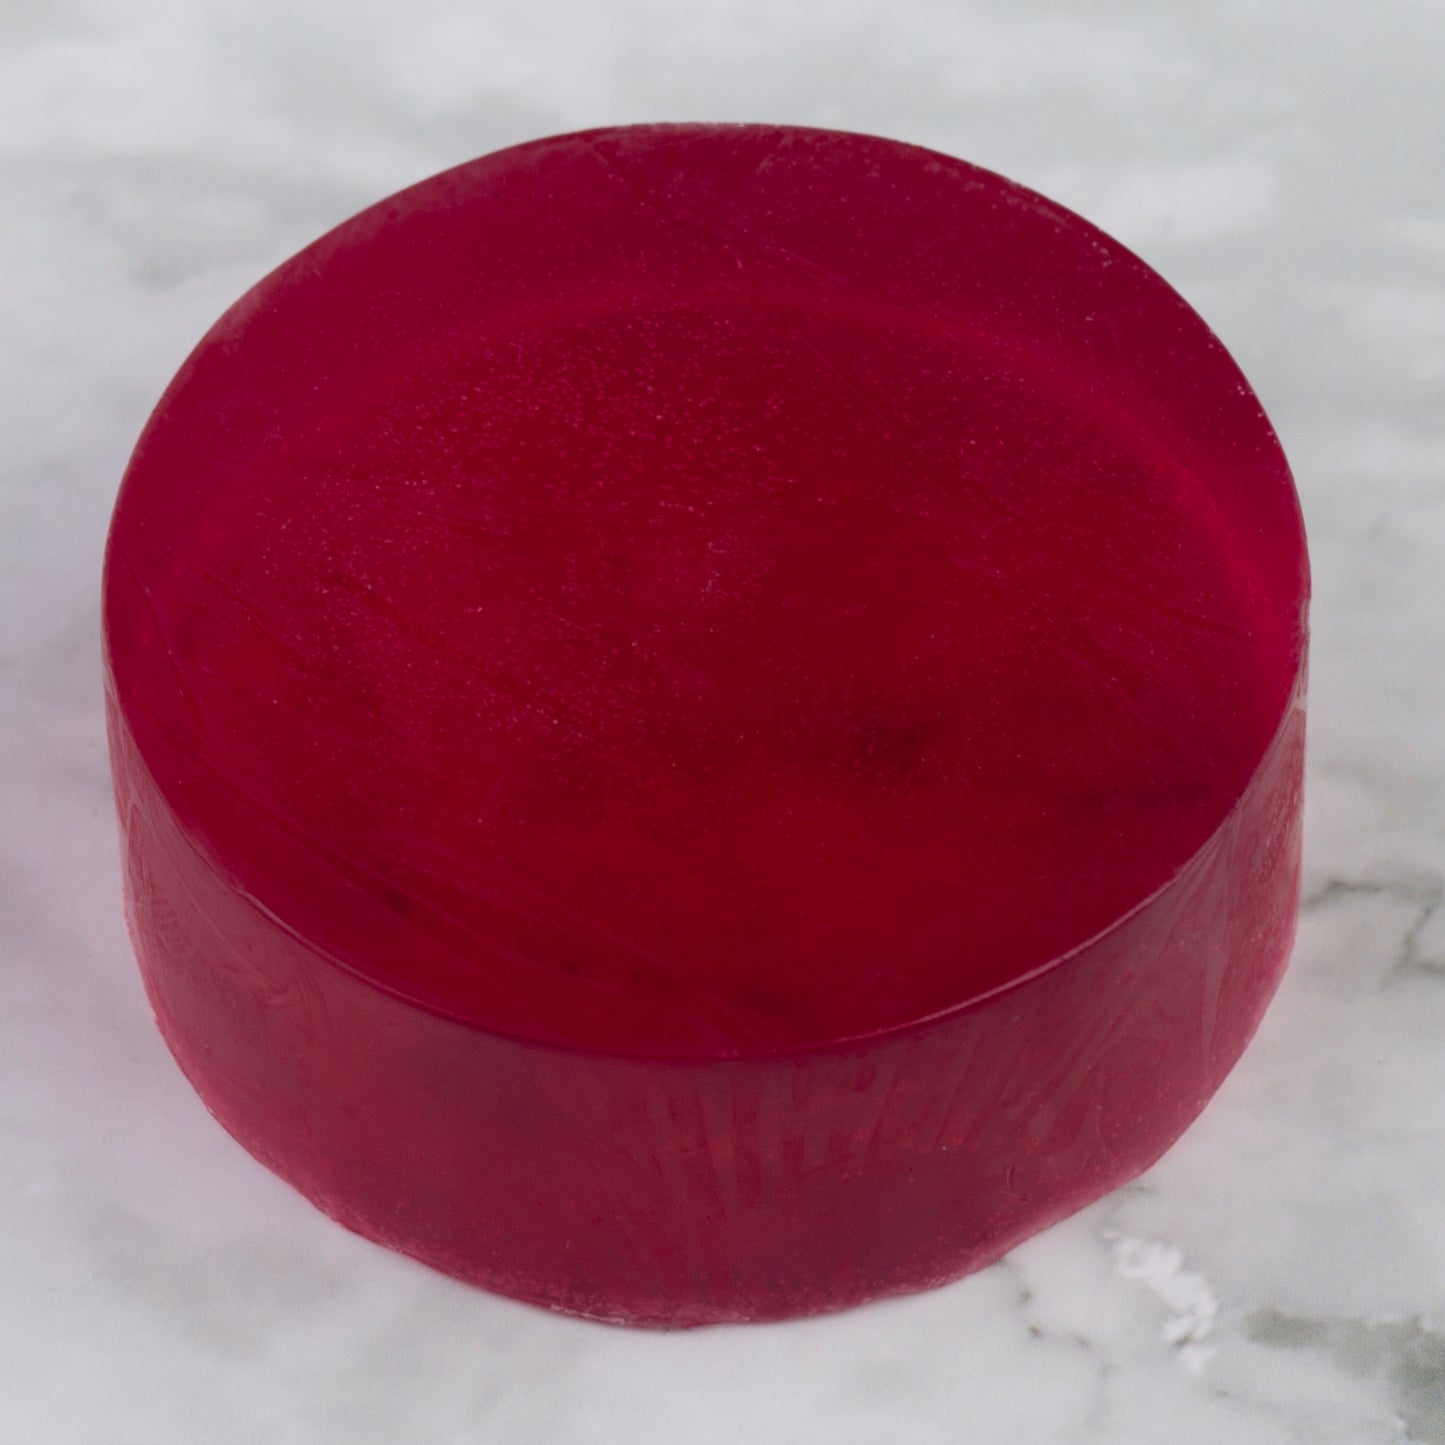 Strawberry Red Jewel Tone Liquid Colour